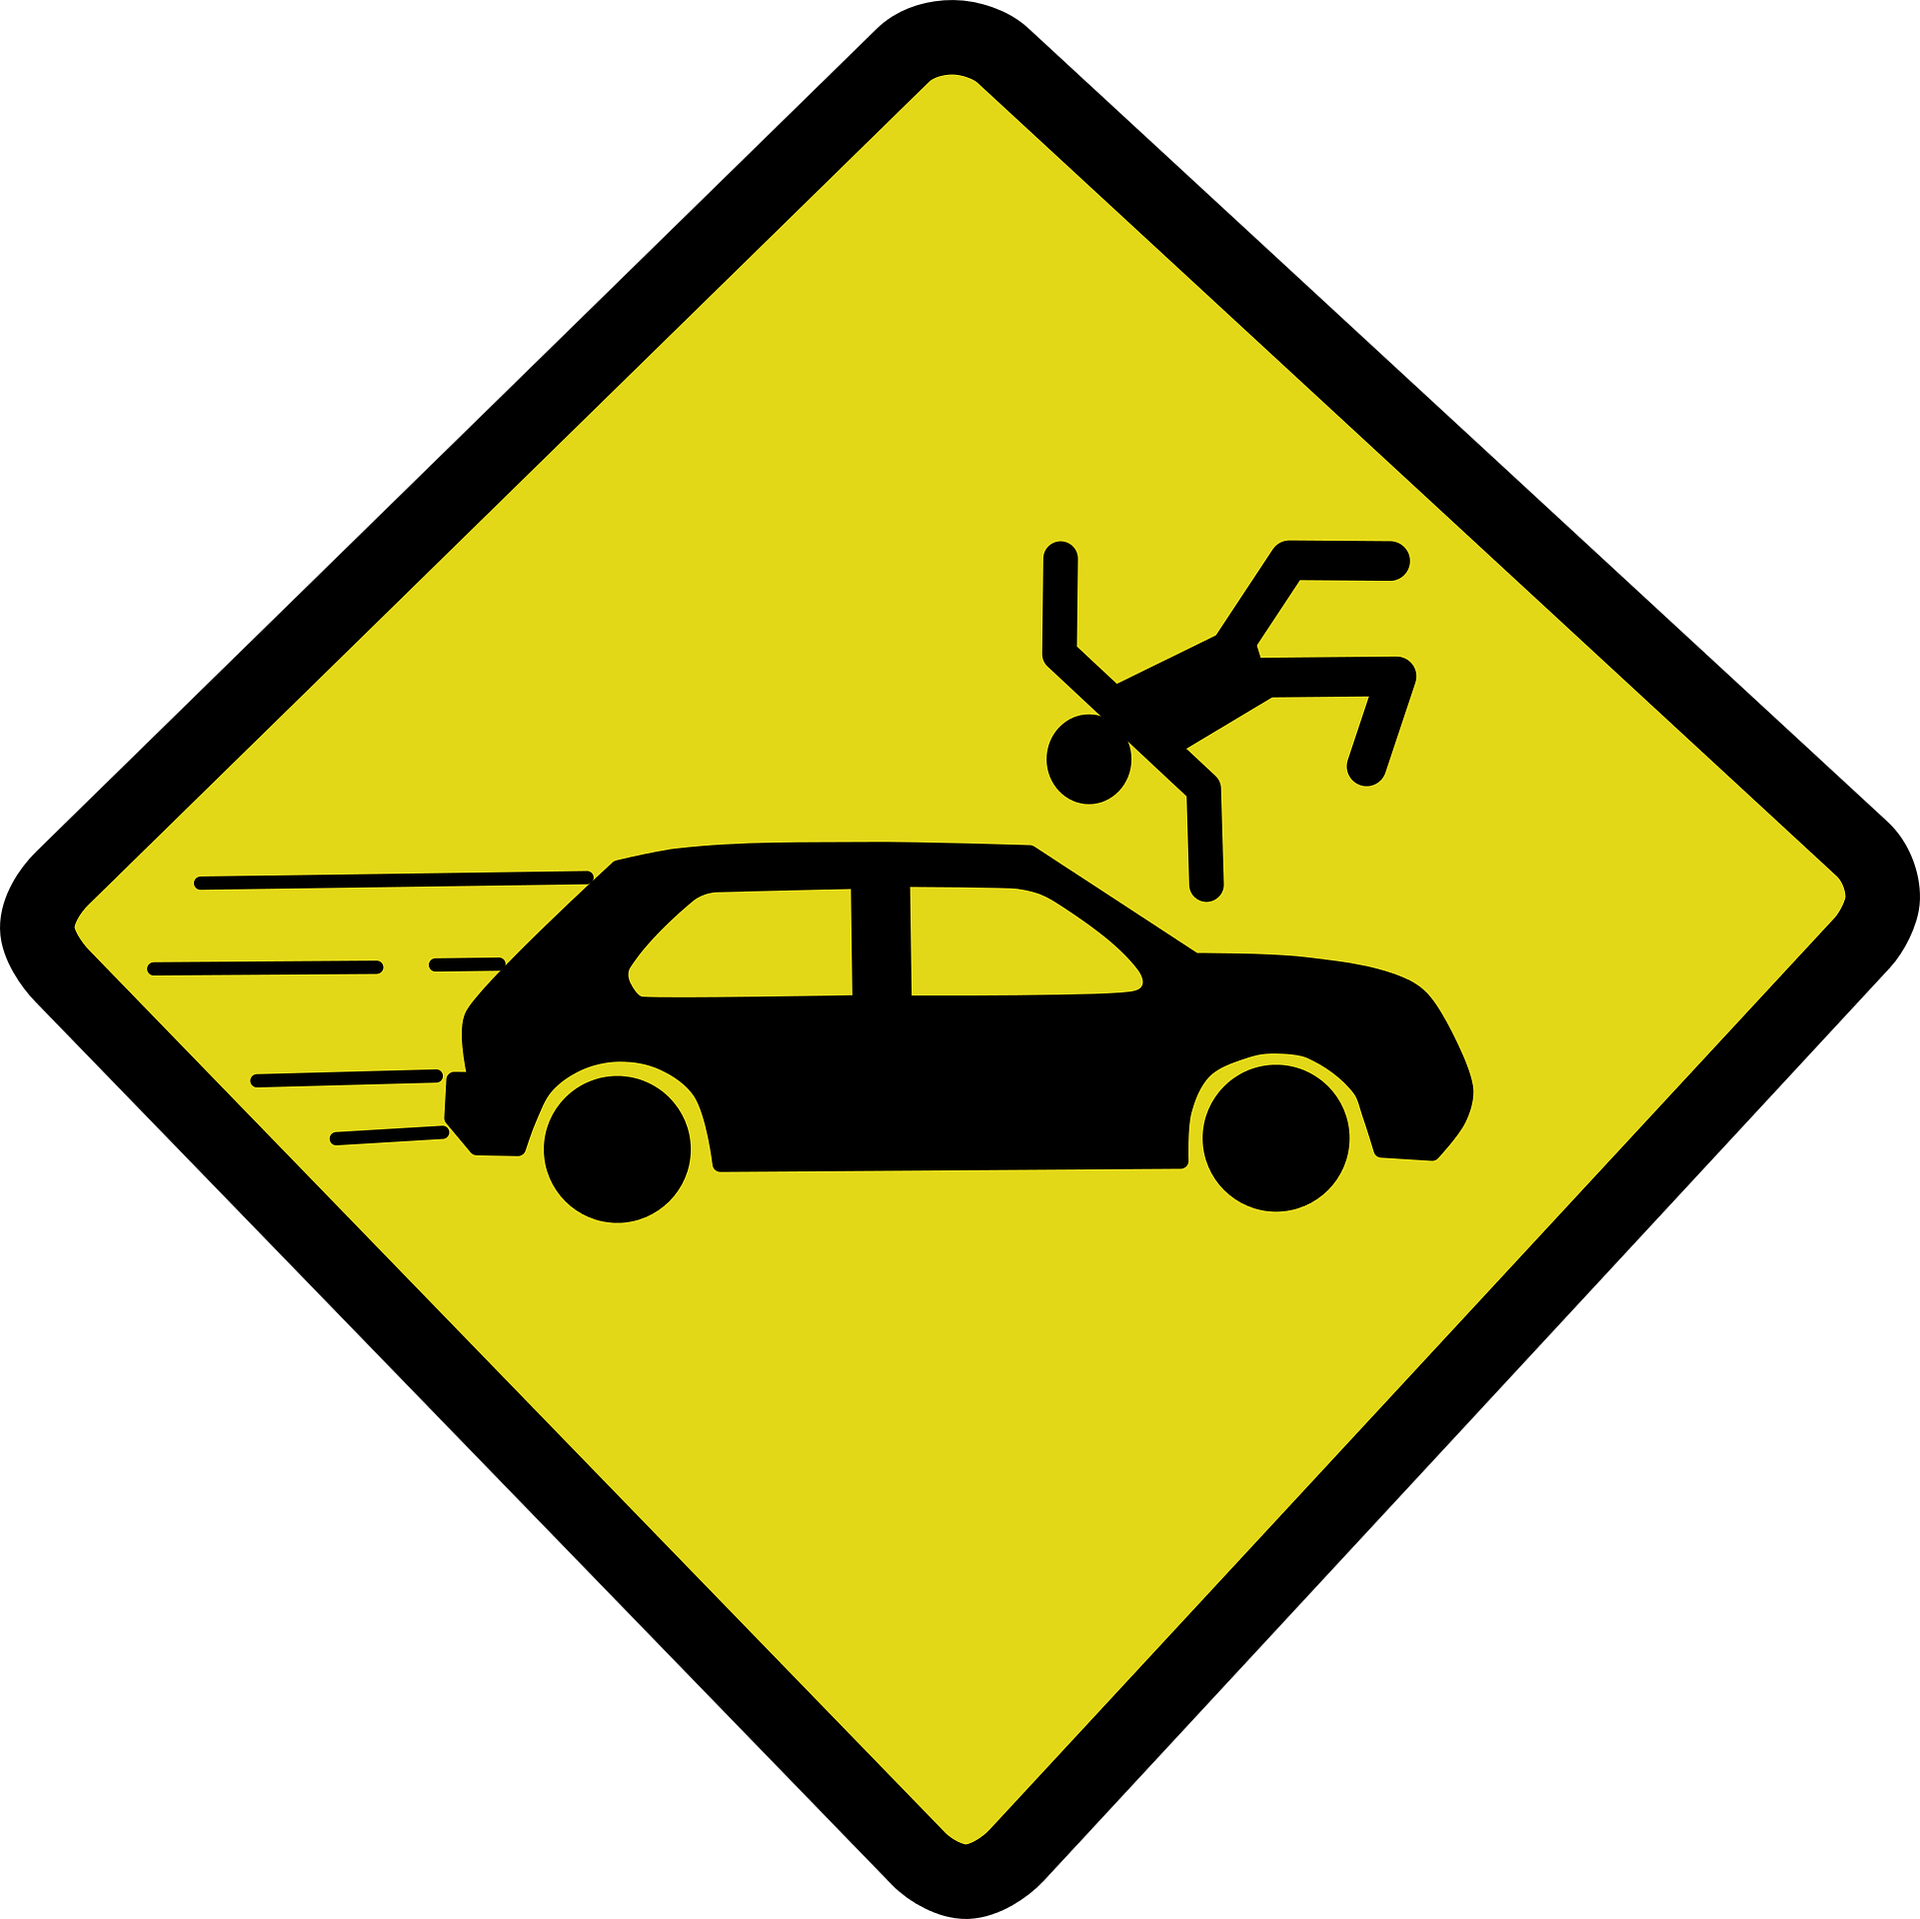 Warning sign of car hitting person